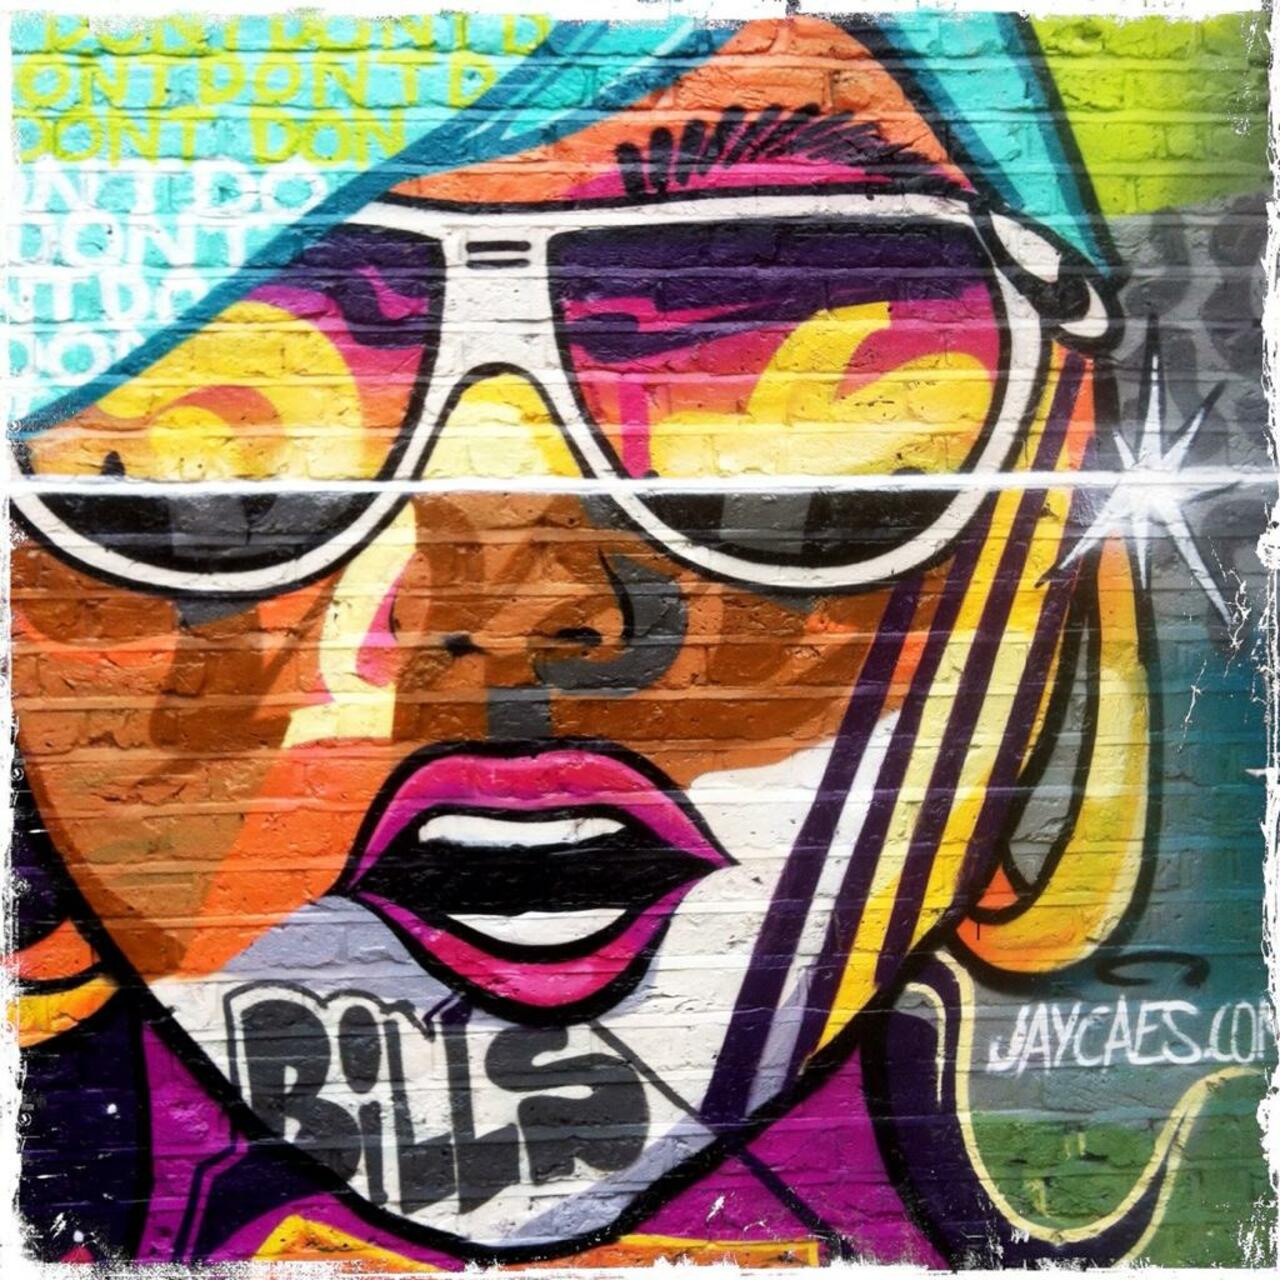 “@BrickLaneArt: Beautiful streetart by #Jaycaes 

#art #graffiti http://t.co/bpcJV4p9ZH”